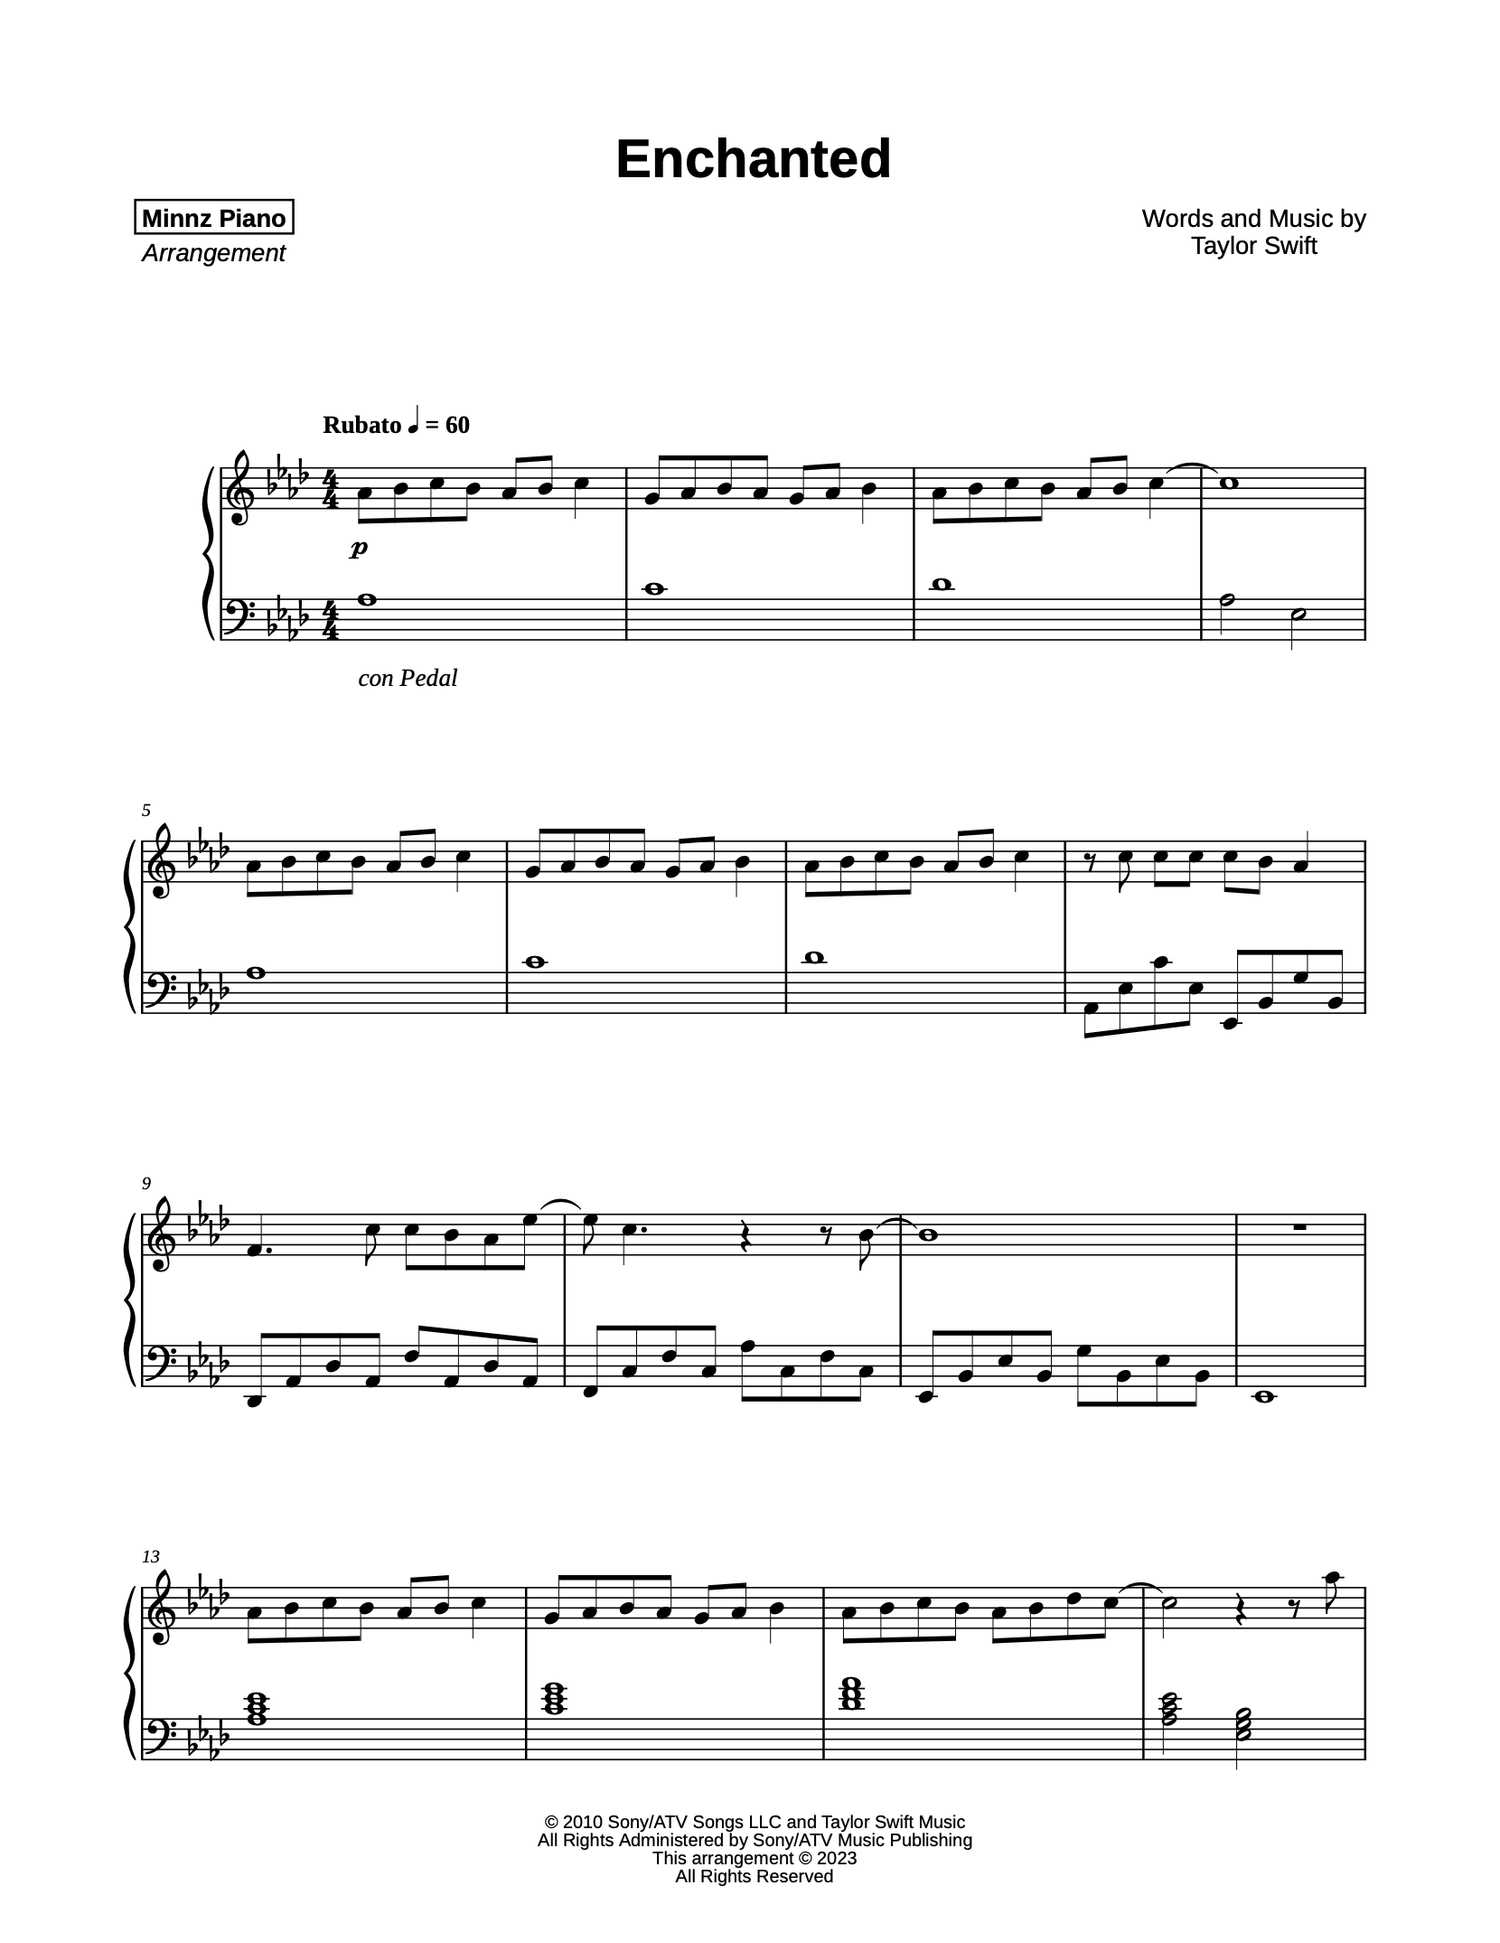 Flute Sheet Music: traitor - Olivia Rodrigo